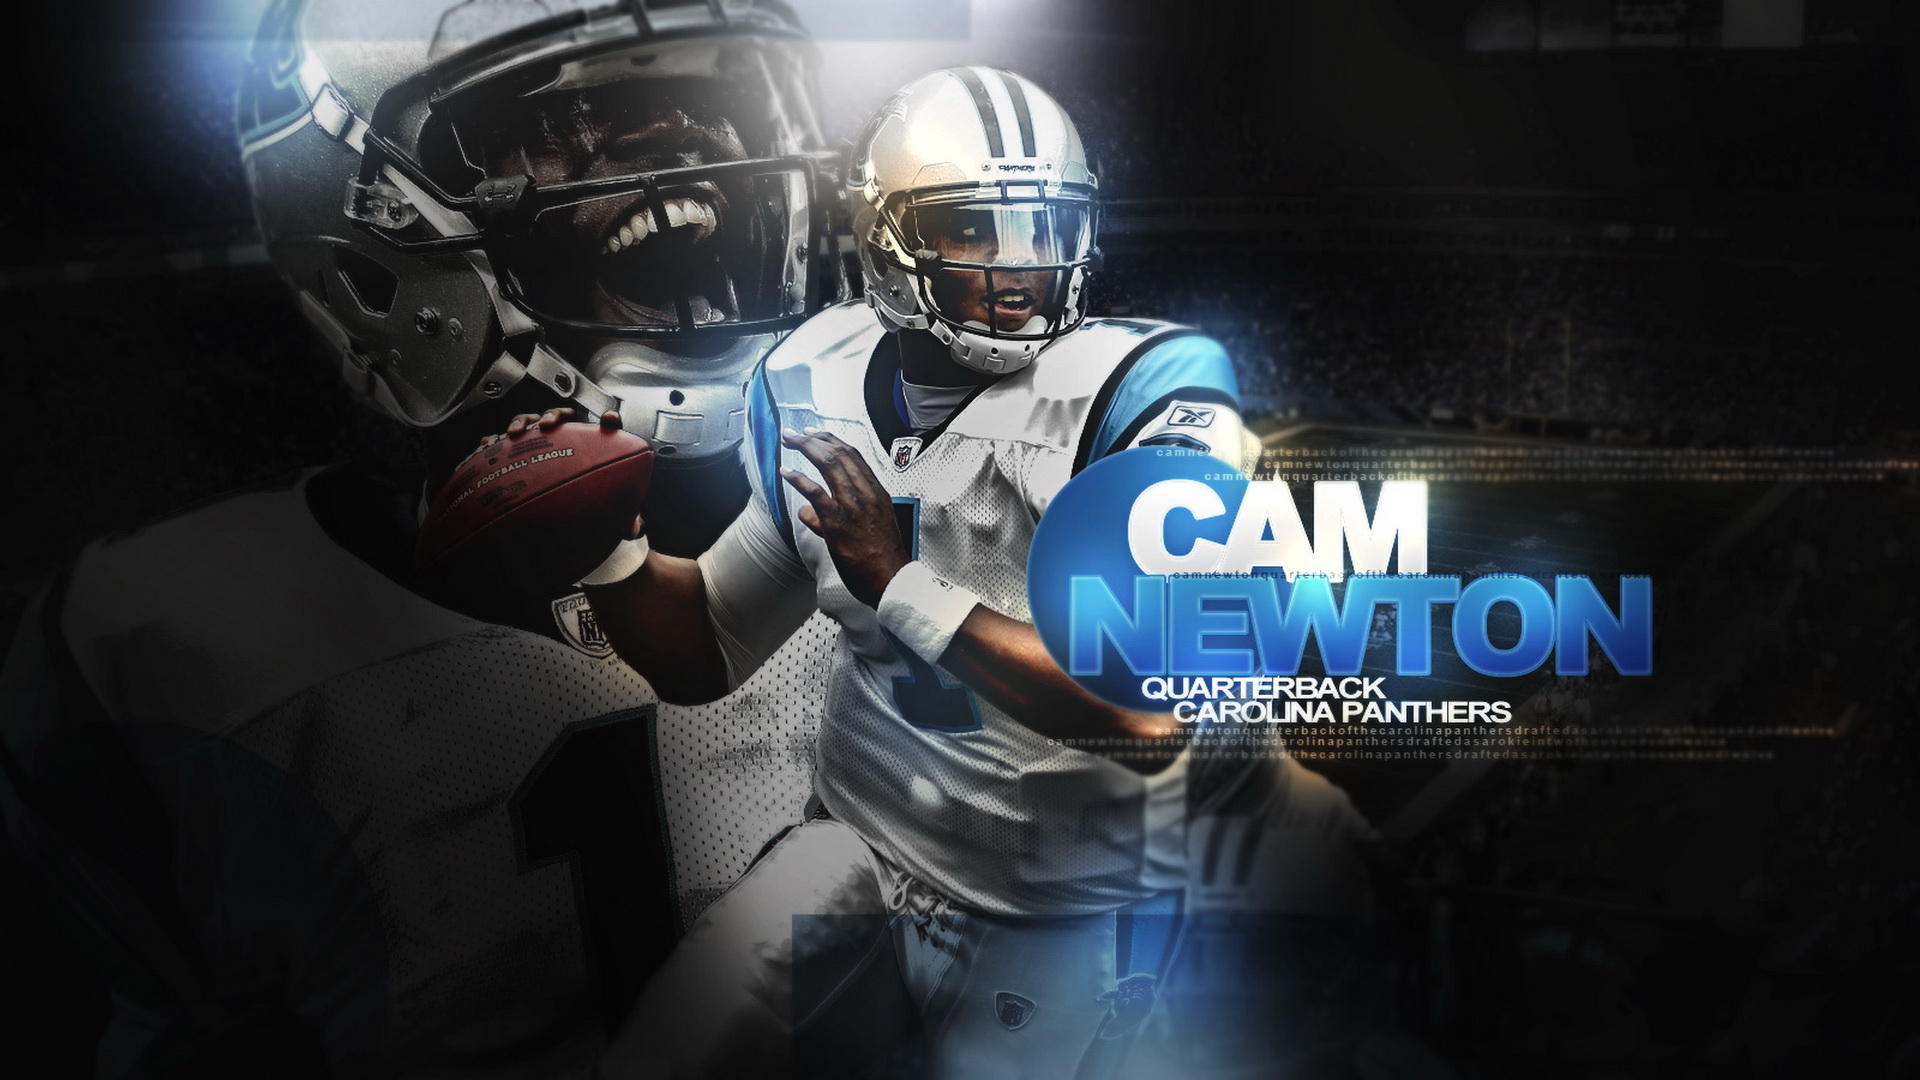 Wallpaperres.com | Carolina Panthers NFL Team, Cam Newton Picture 02